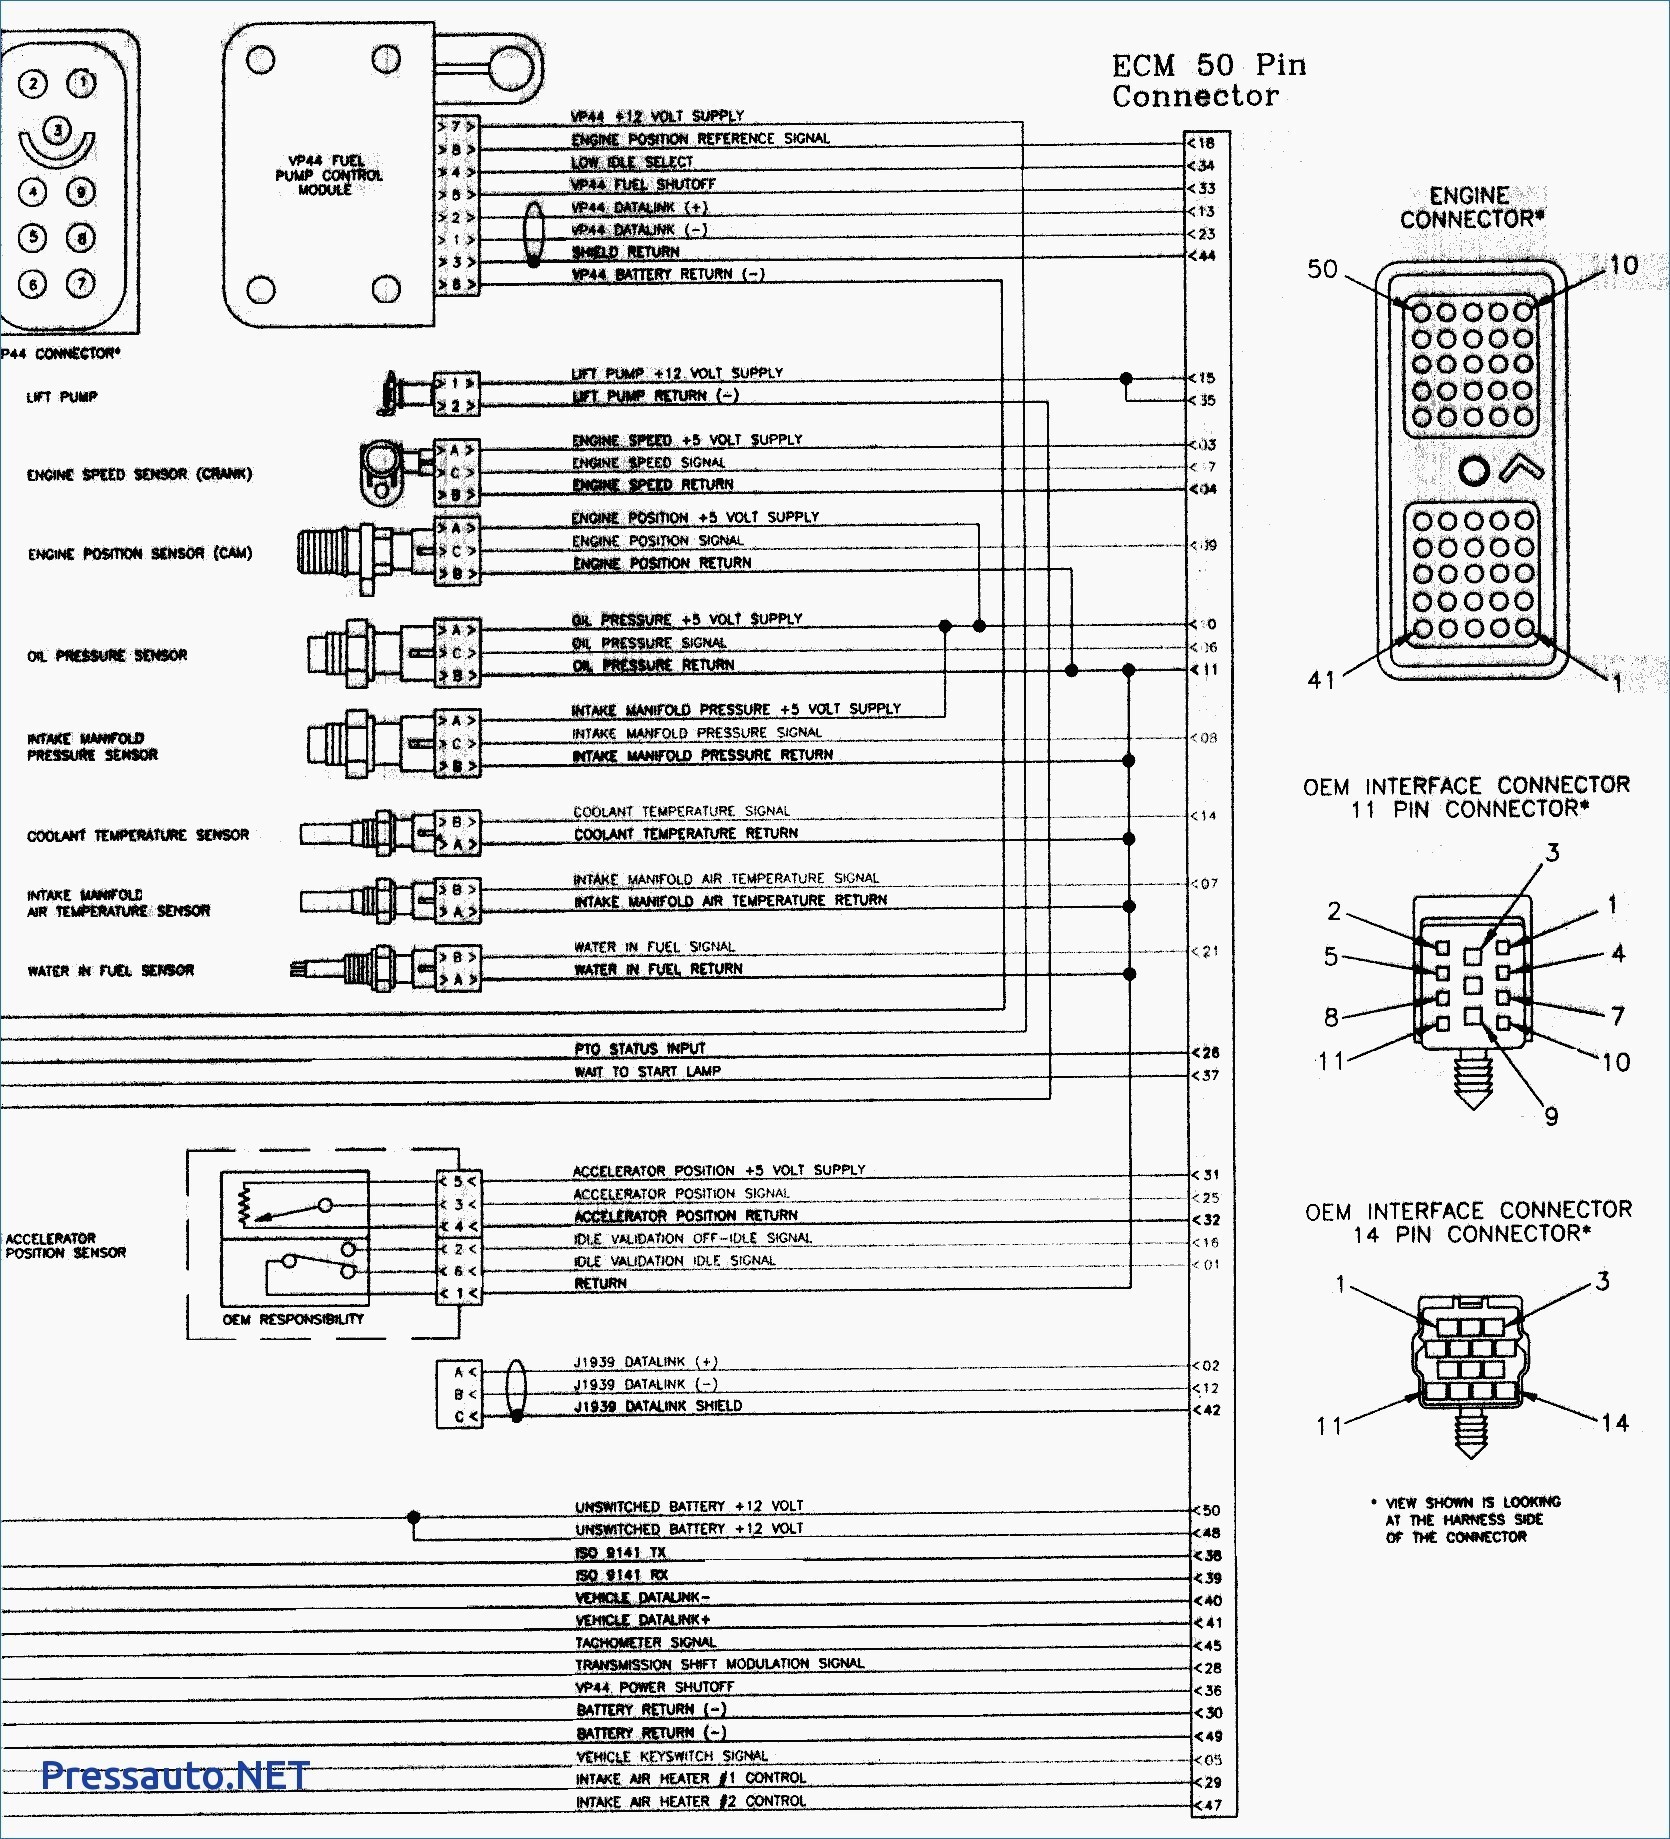 1995 Dodge Ram 1500 Transmission Wiring Diagram Refrence 2001 Dodge Ram 1500 Trailer Wiring Diagram Save